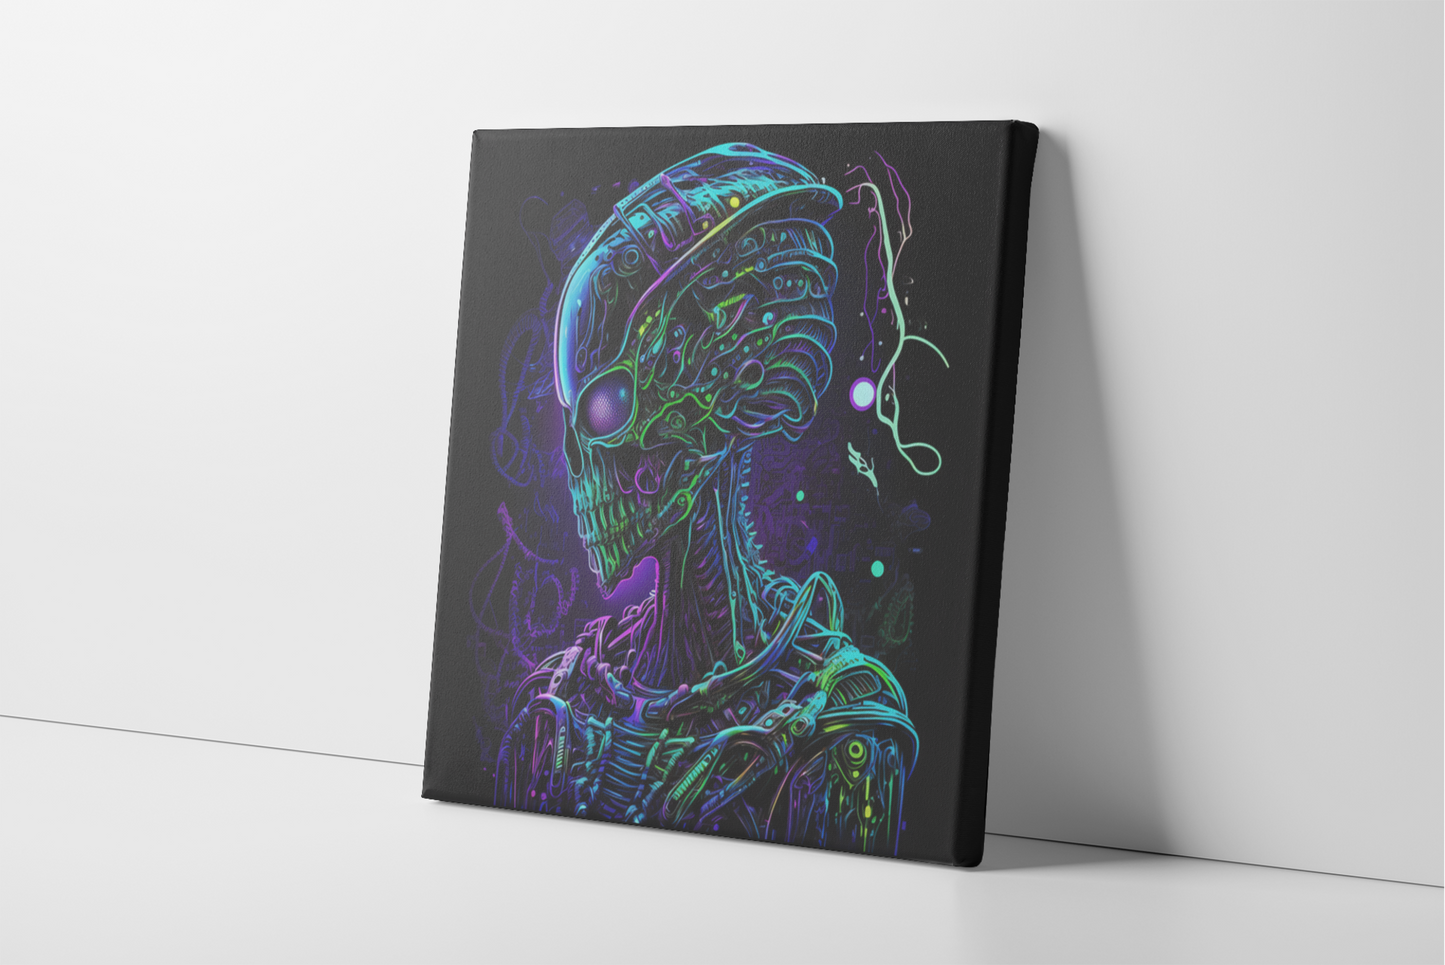 Black Light Robotic Alien Canvas Wall Art, Neon Alien Canvas Painting, Glowing Alien Painting on Black Background, Alien Skull Art